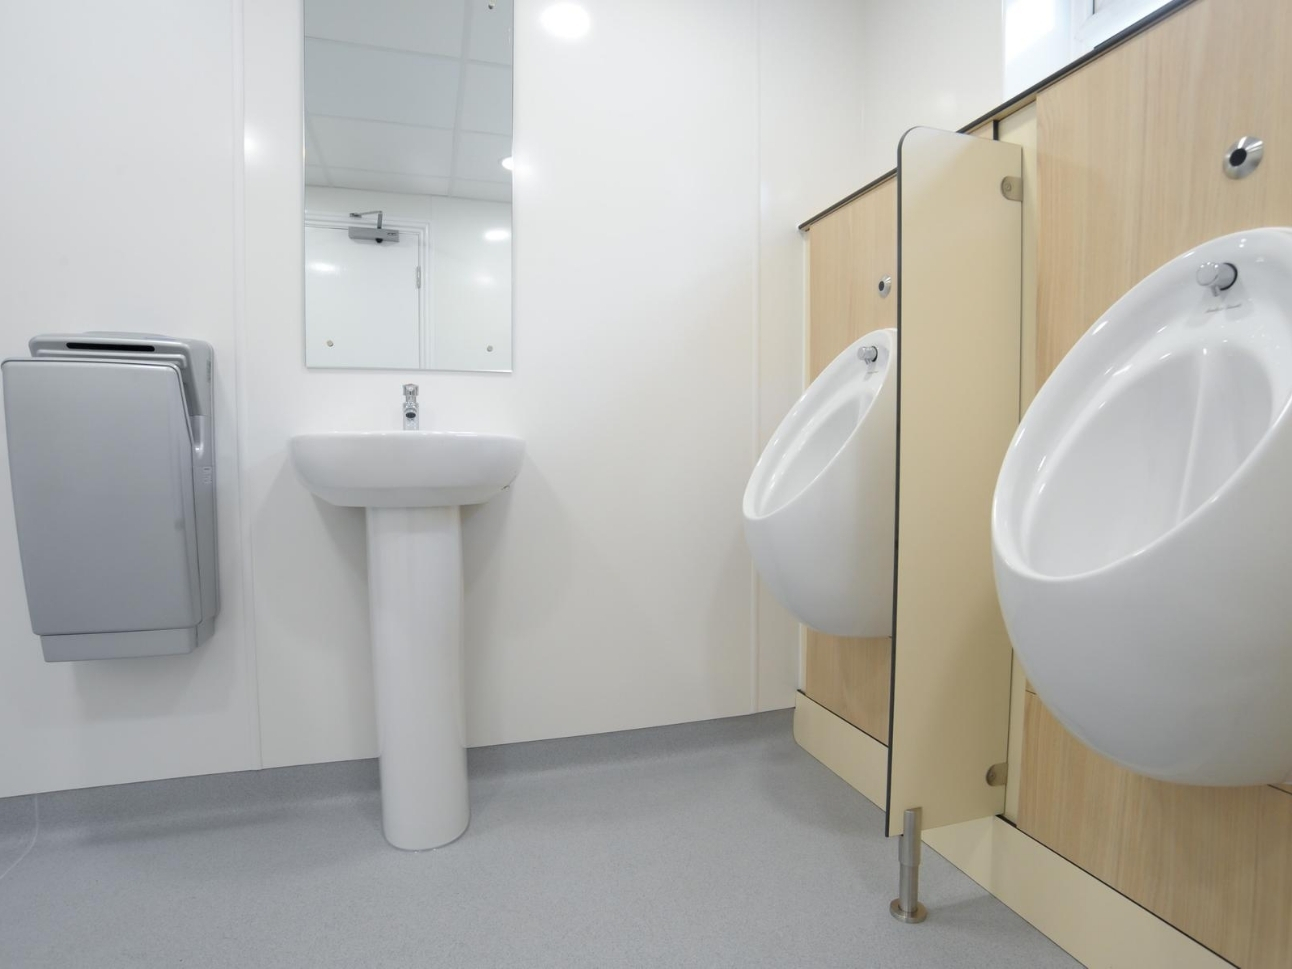 Malling Town Club Male Washroom Refurbishment | Case Study | Commercial Washrooms